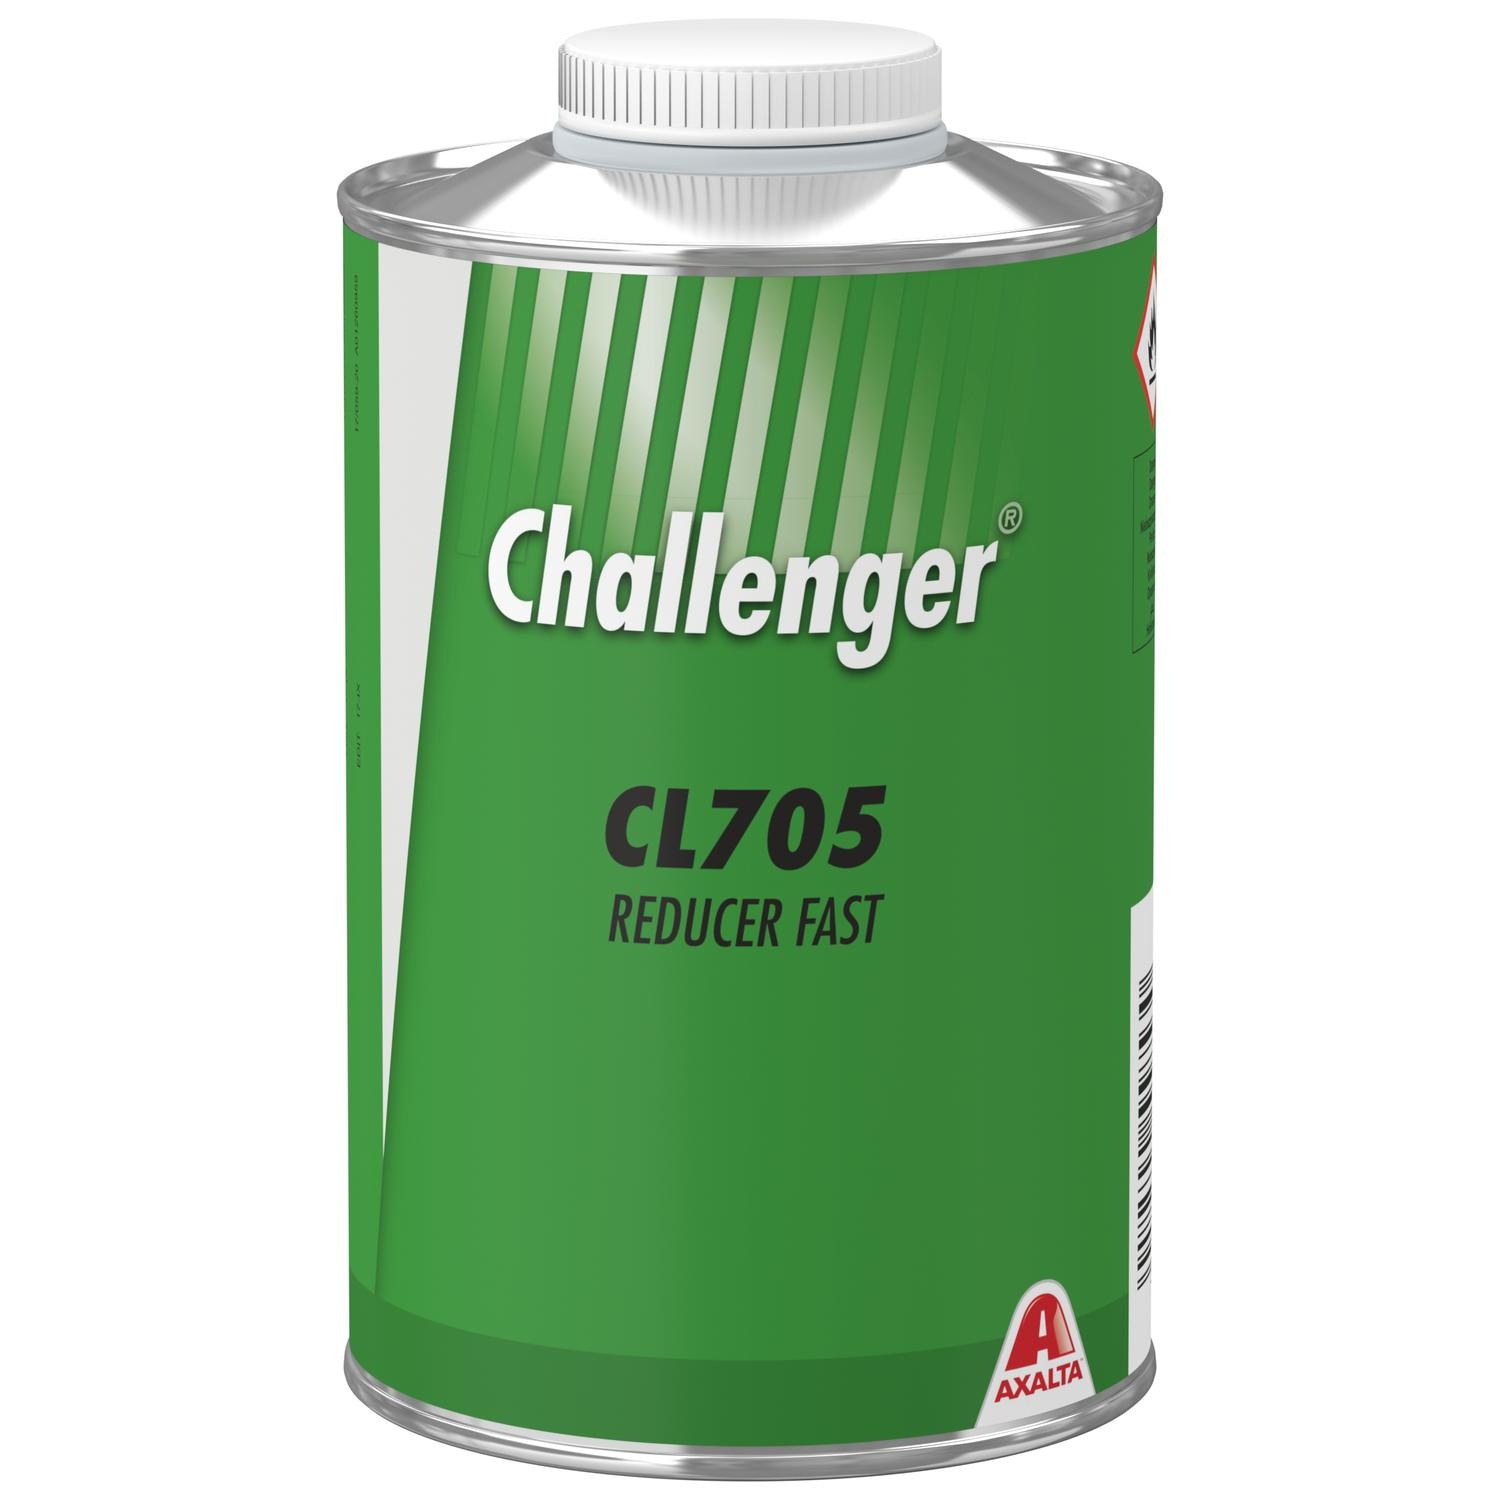 CL 705 Разбавитель быстрый Challenger 1л